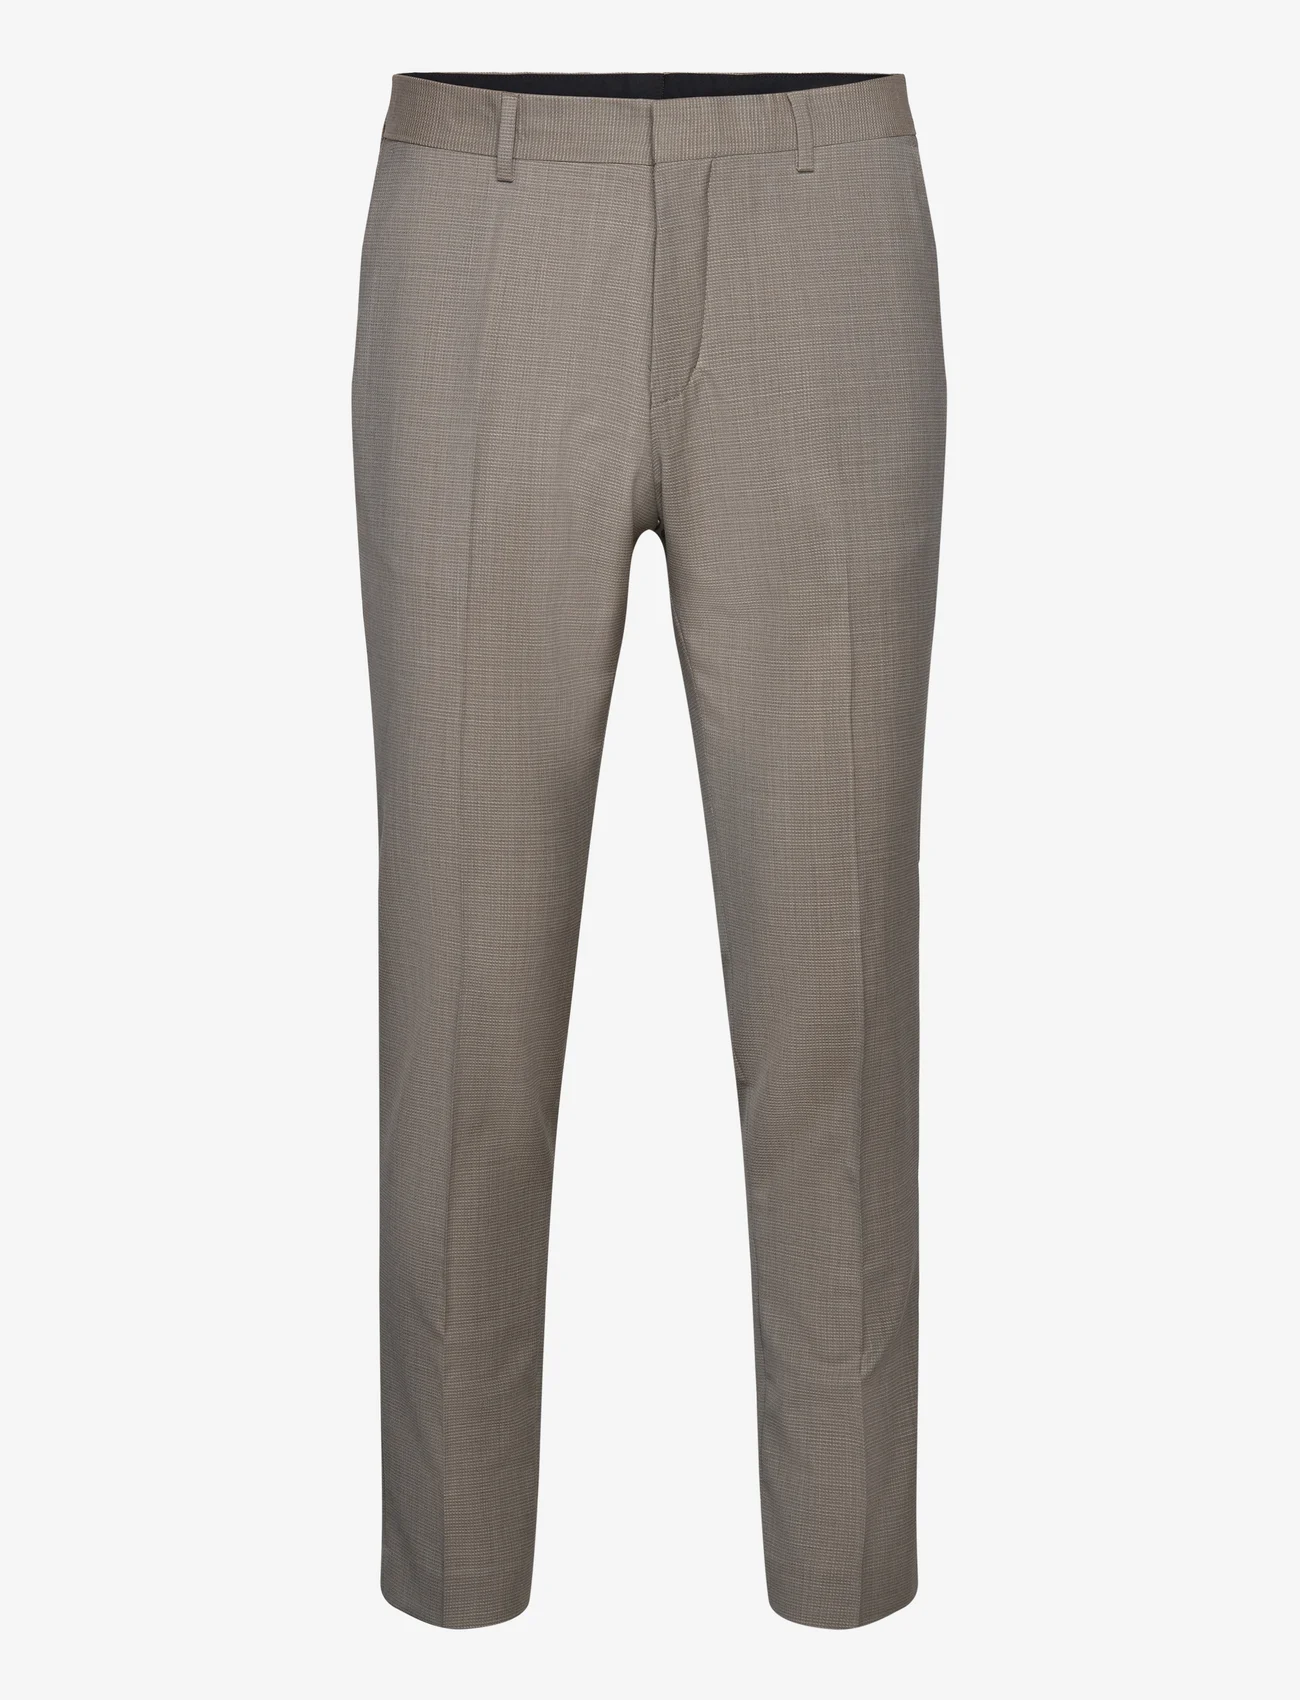 Tiger of Sweden - TENUTAS - suit trousers - cashmere - 0